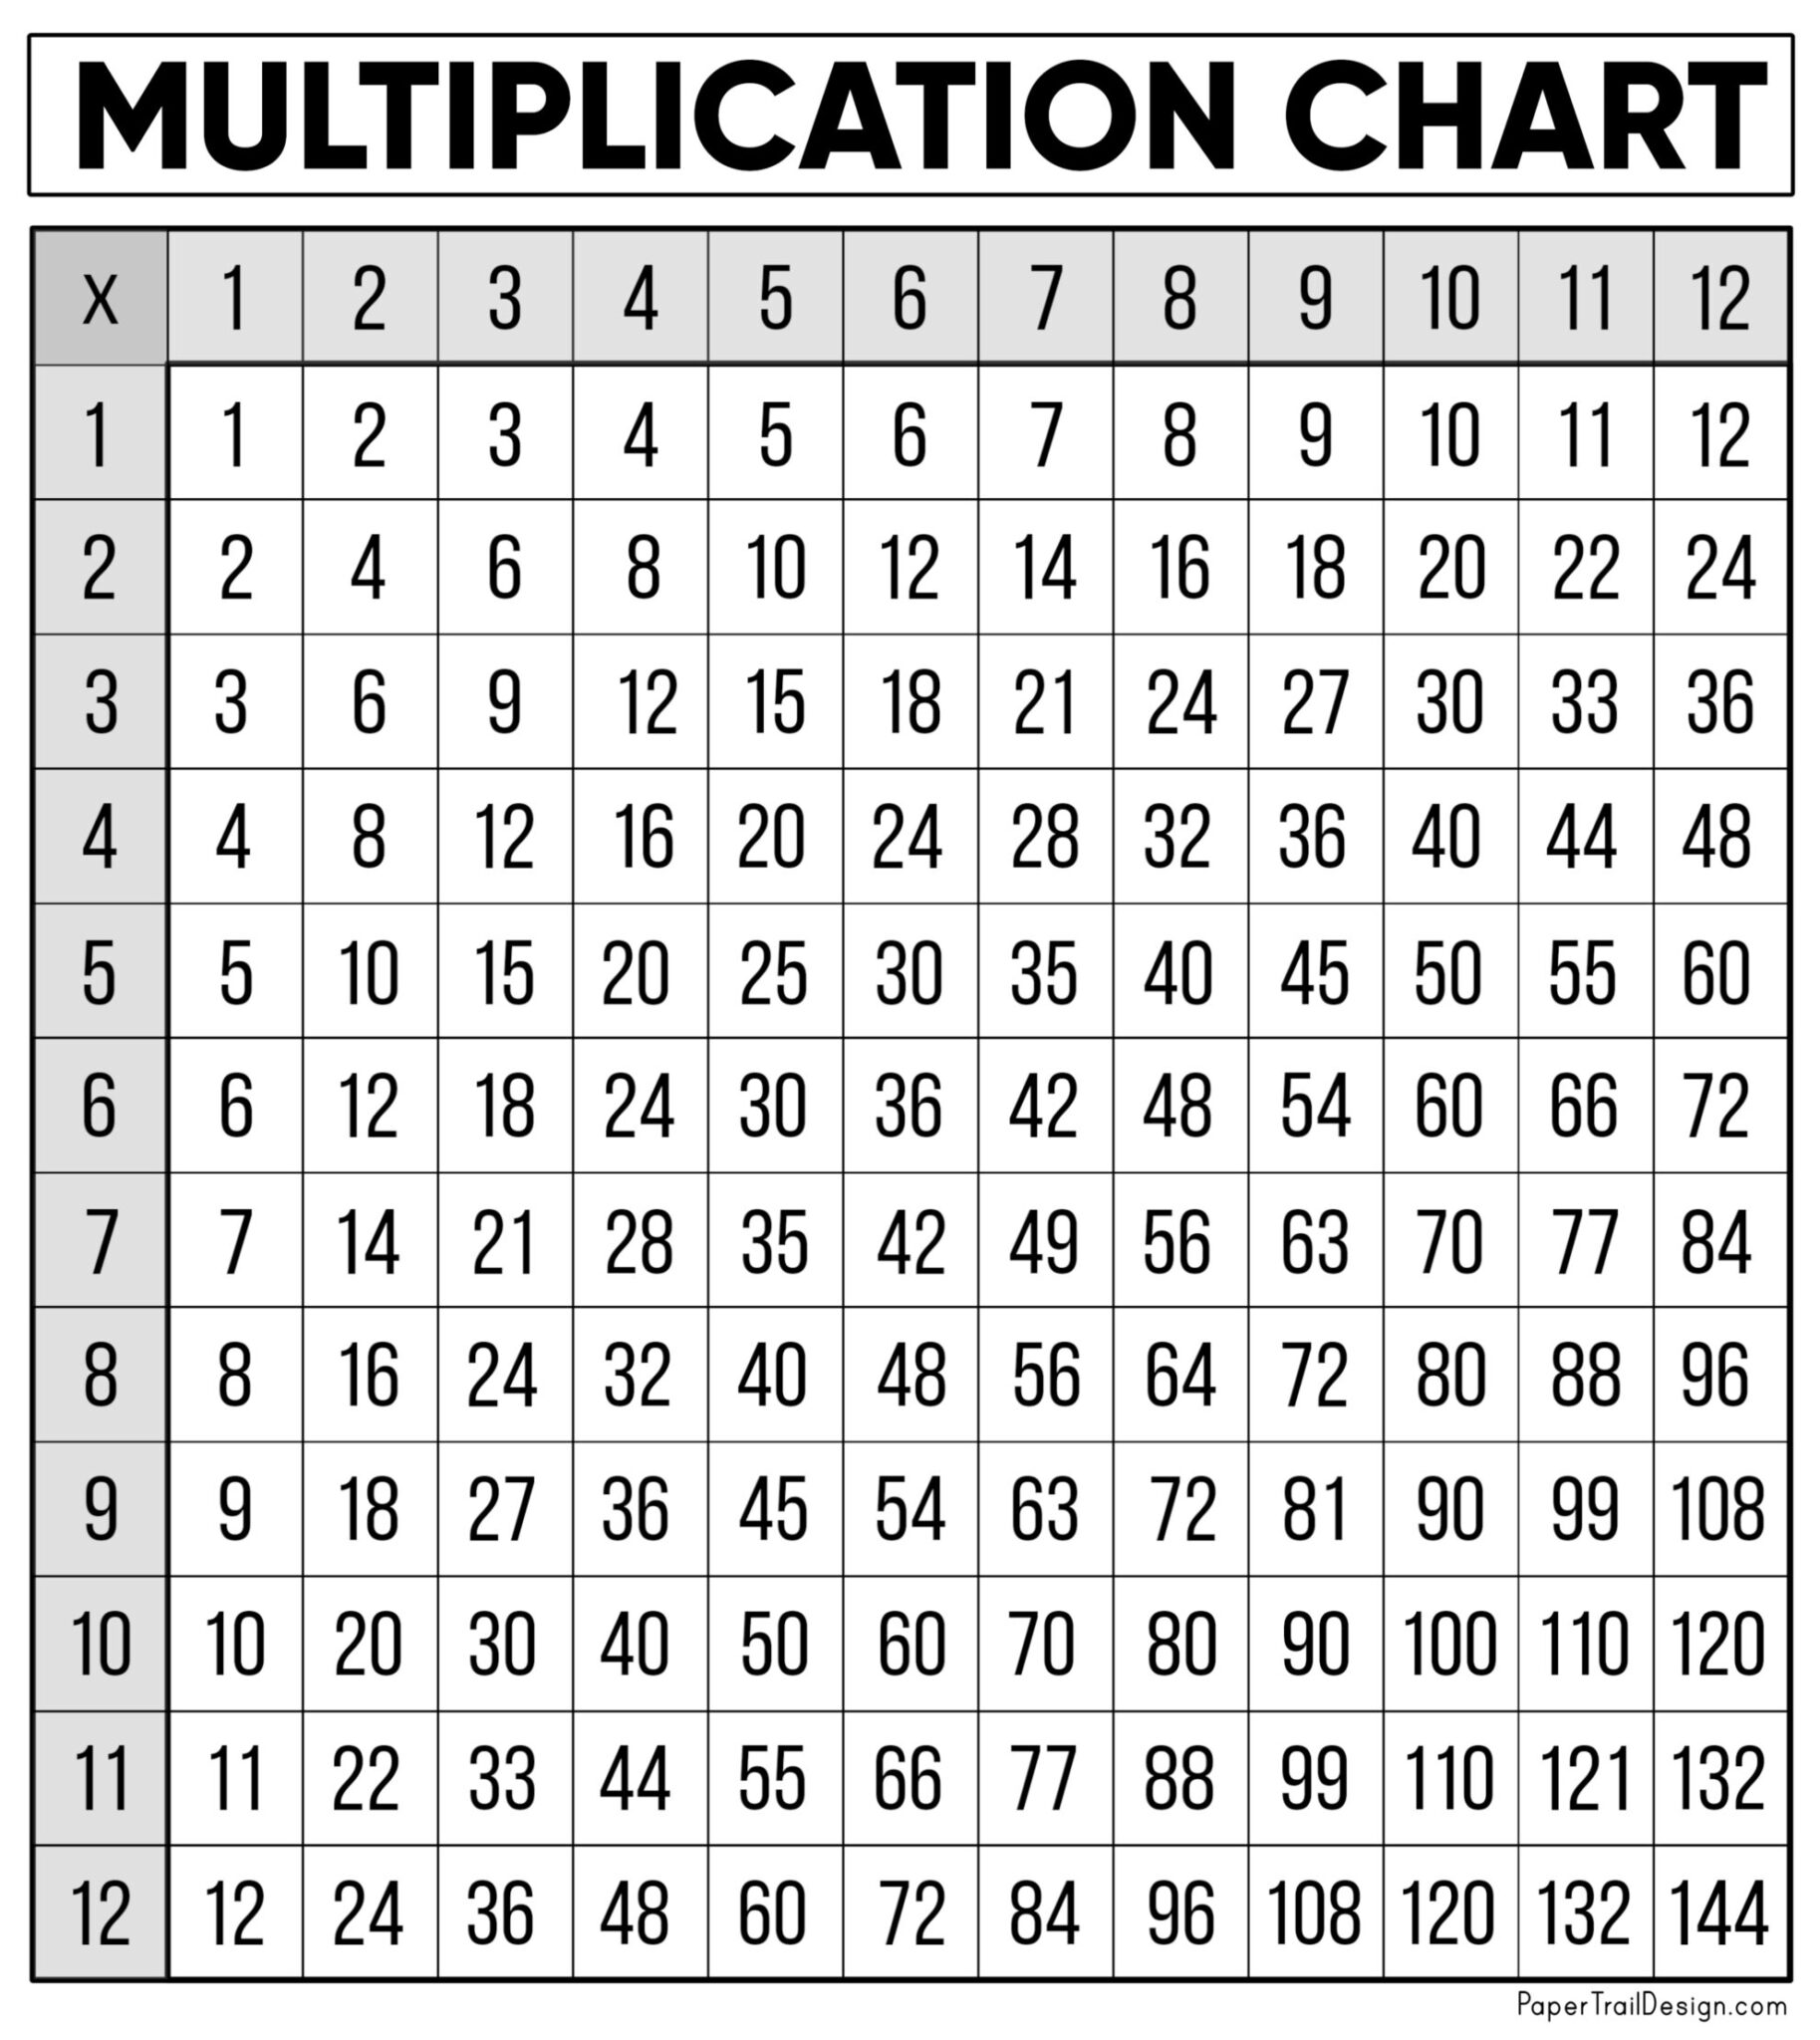 multiplication-chart-printable-blank